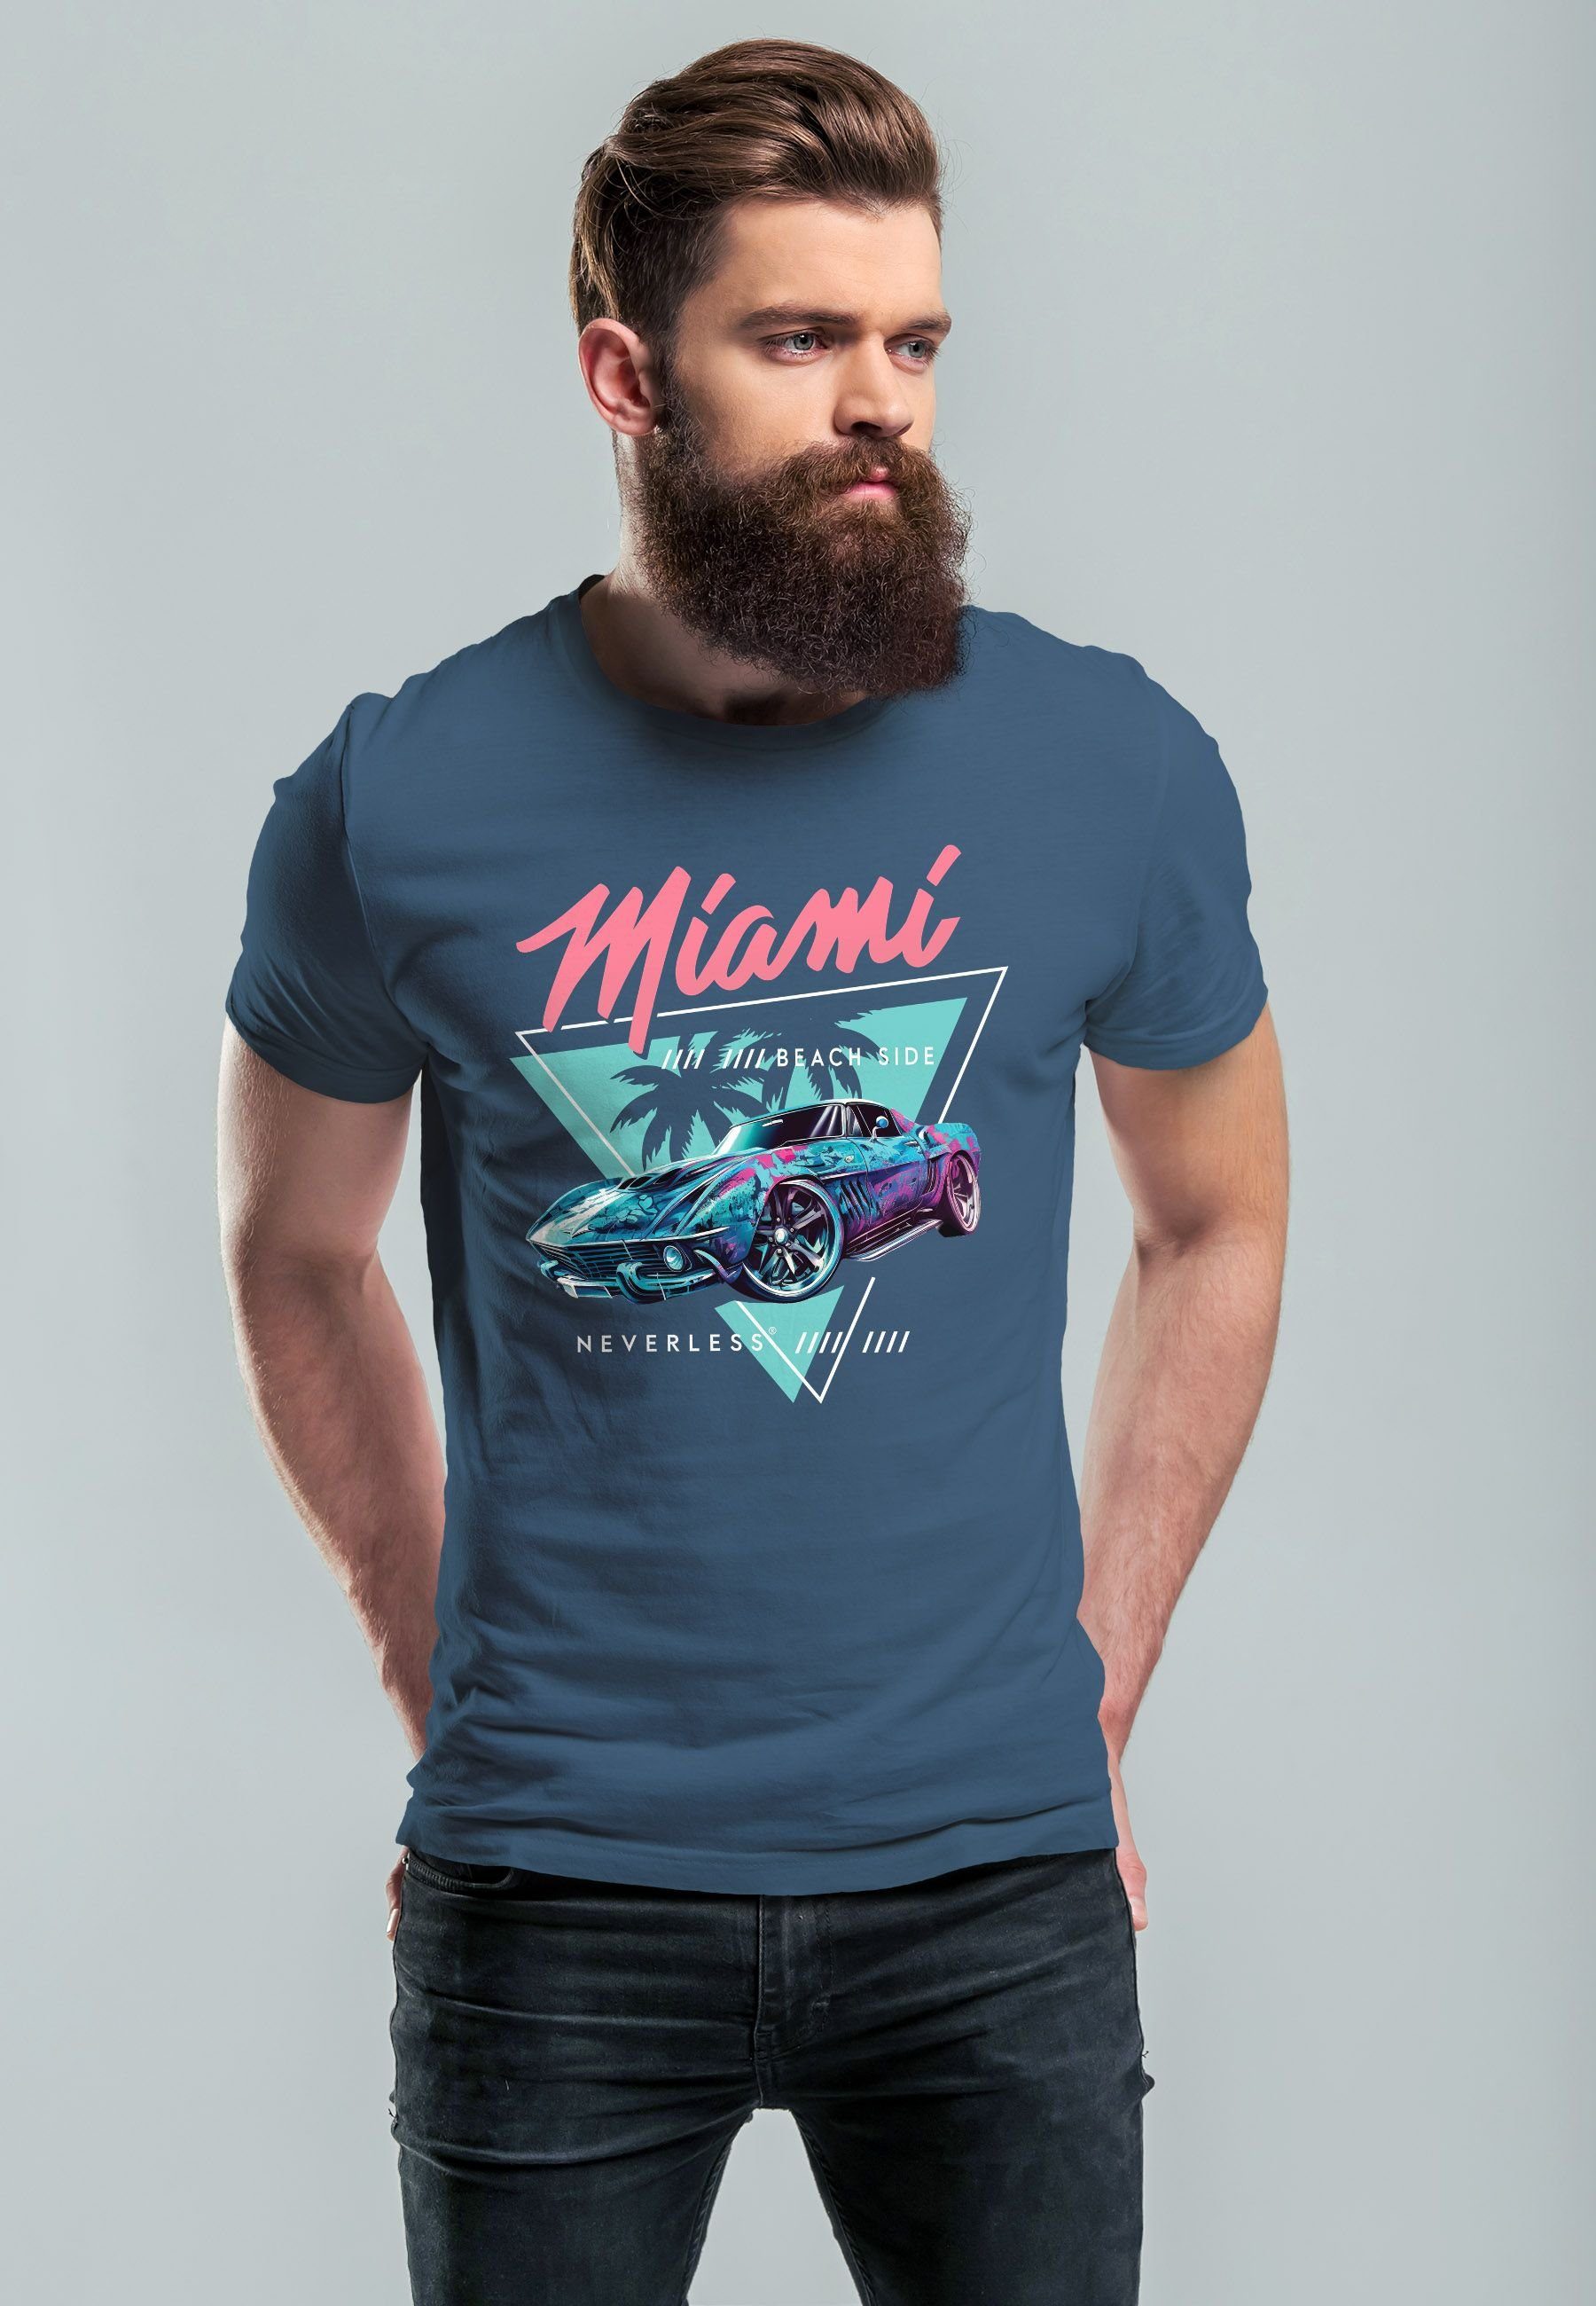 Neverless Print-Shirt Bedruckt Miami blue T-Shirt Motiv Print Surfing Herren USA denim mit Automobil Beach Retro